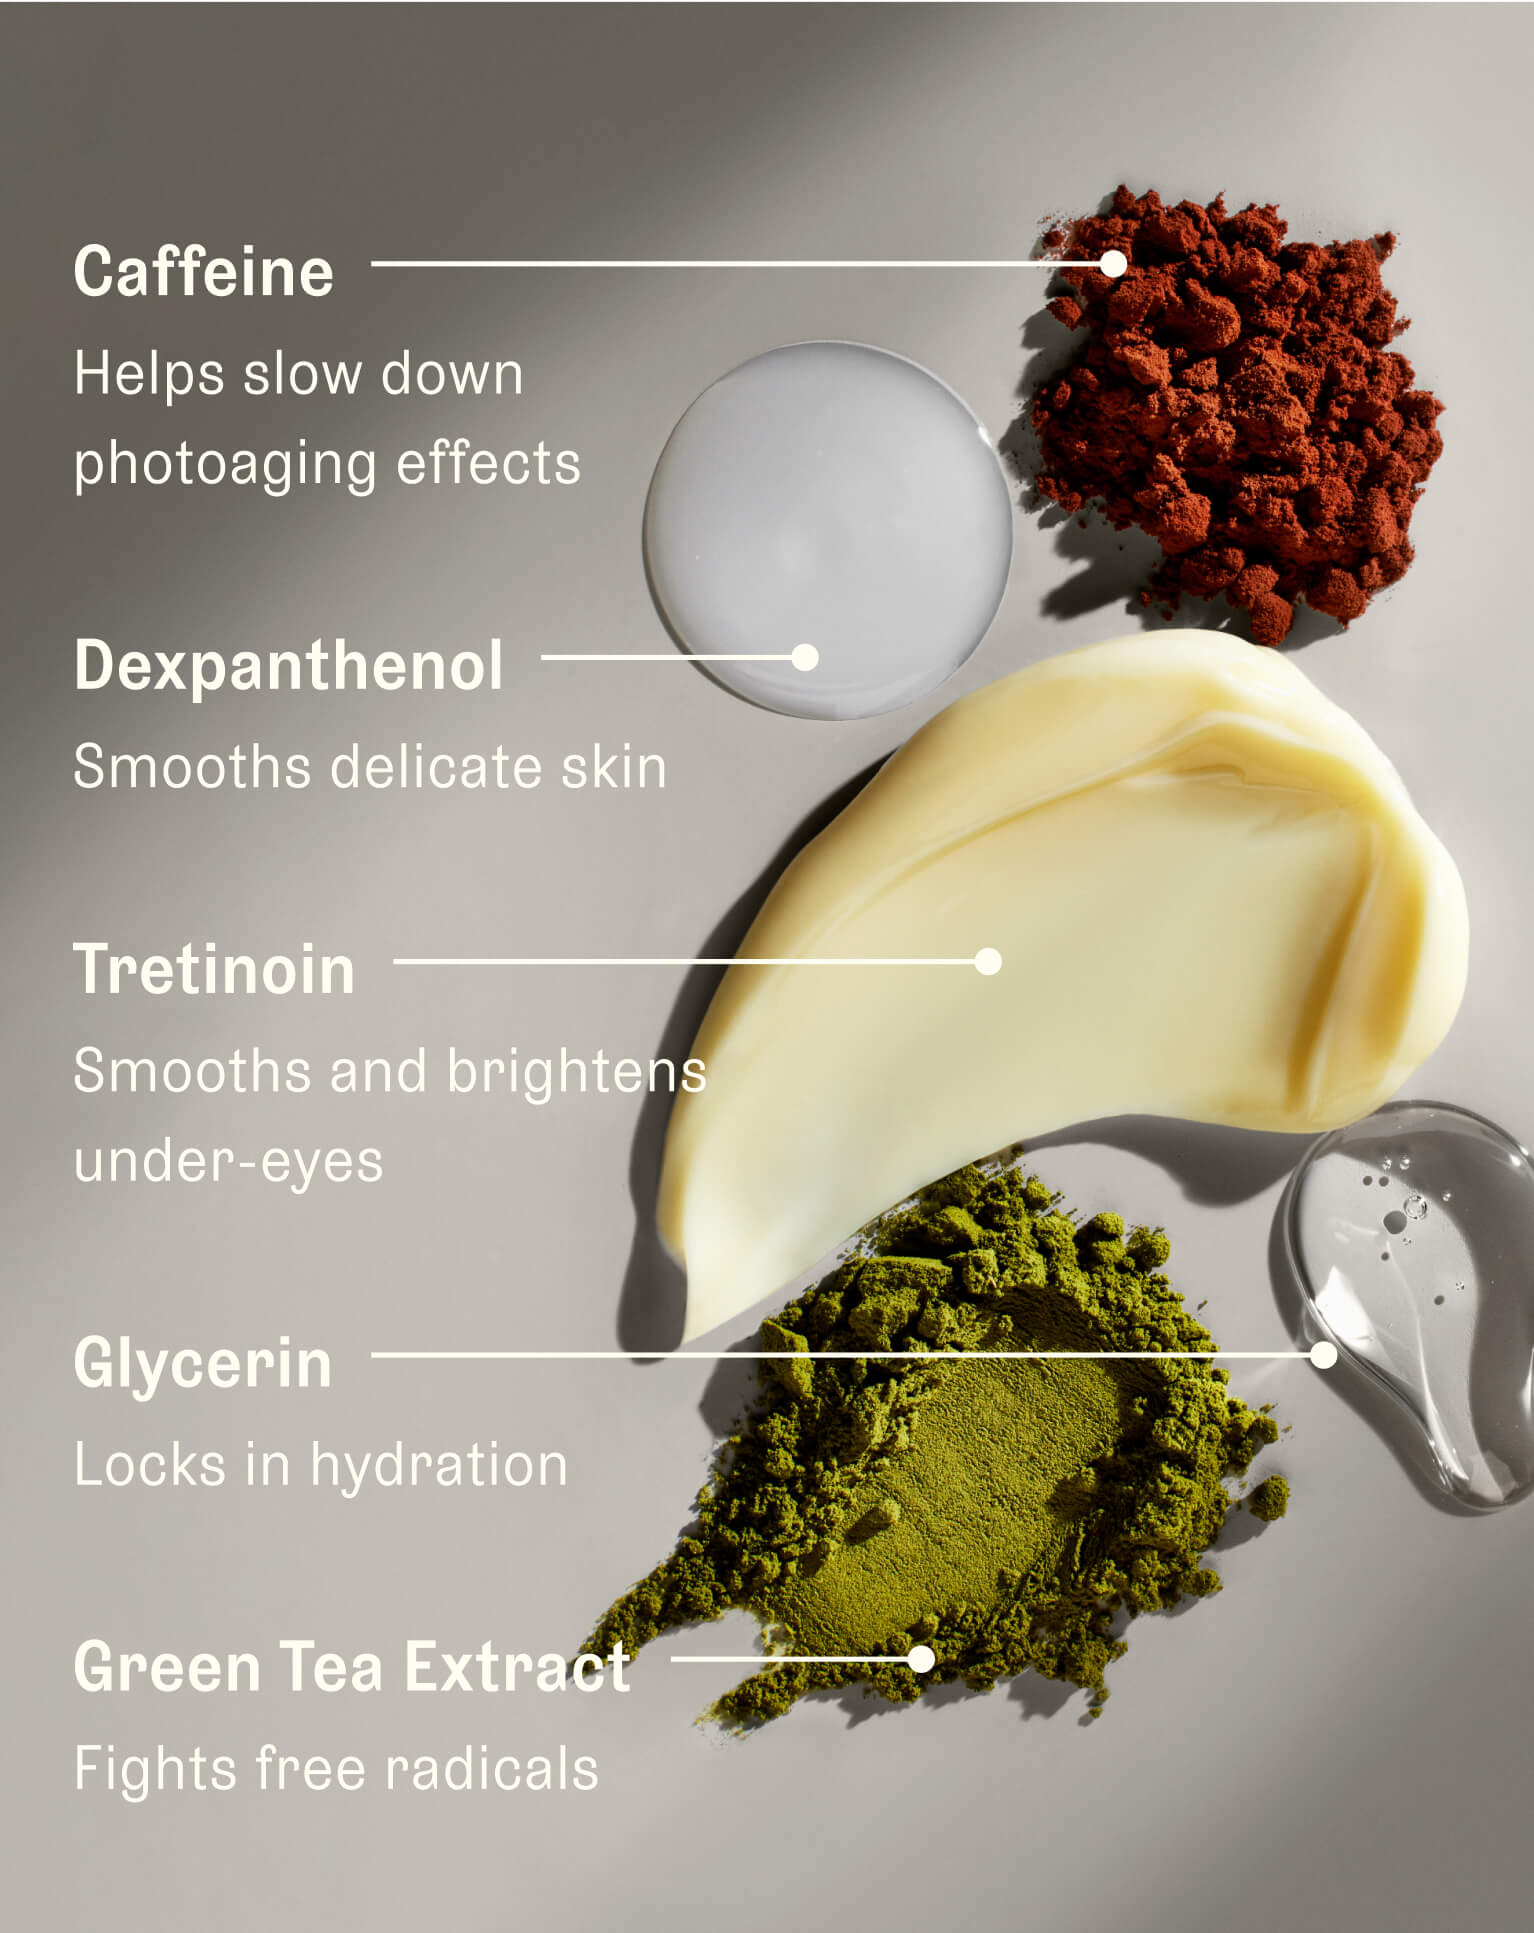 prescription eye cream includes caffeine, dexpanthenol, tretinoin, glycerin, and green tea extract